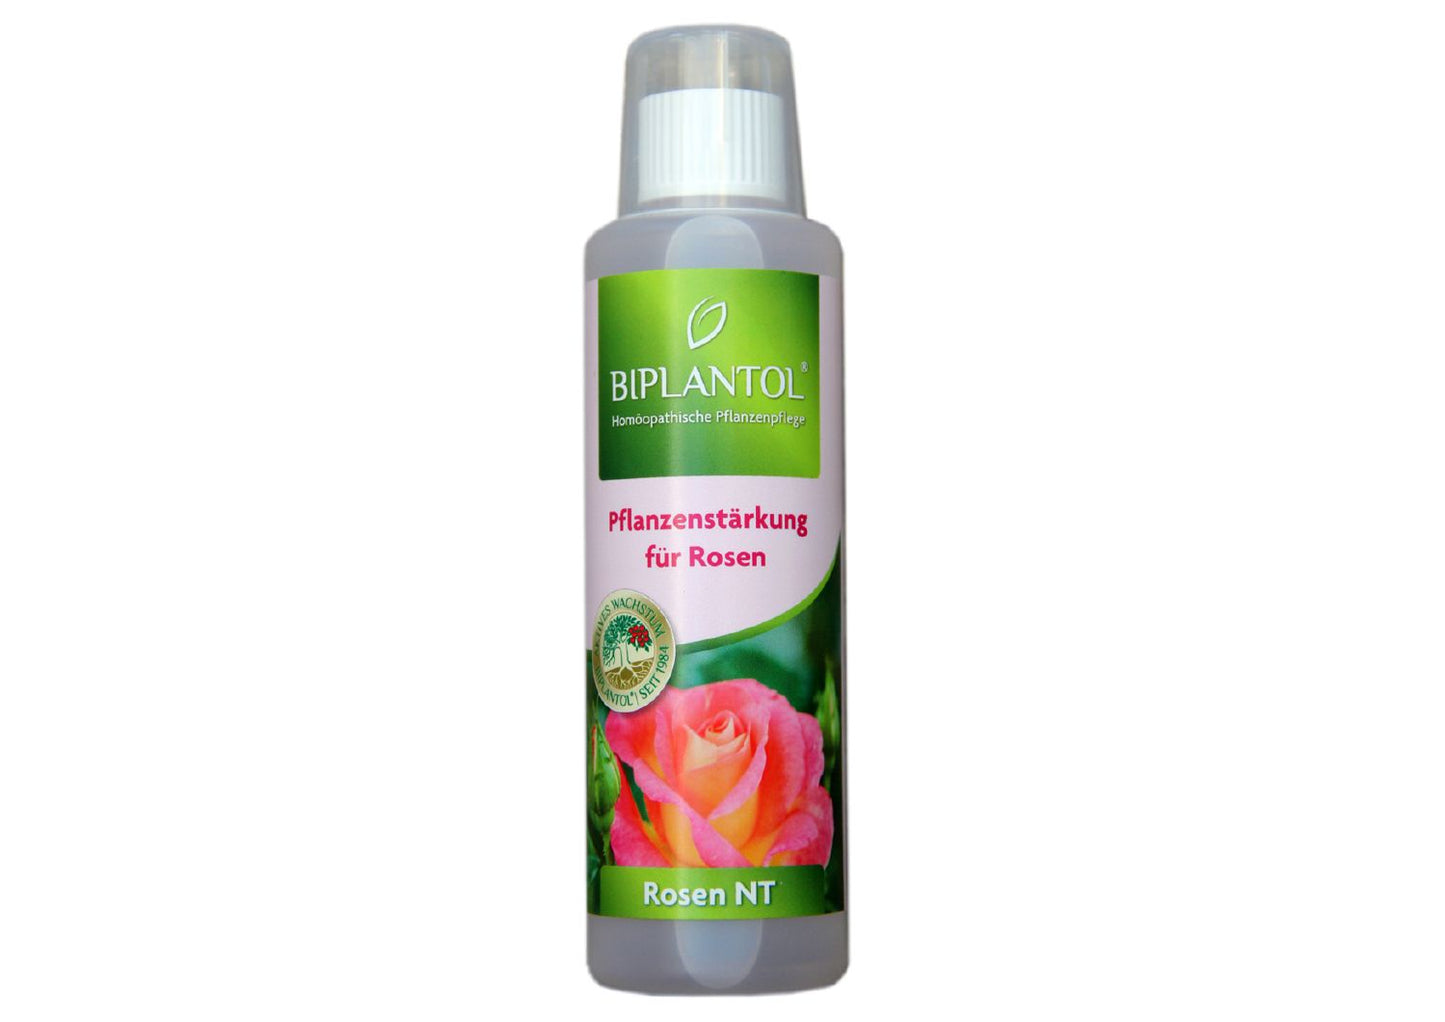 Biplantol Rosen (Pflanzenstärkung für Rosen)